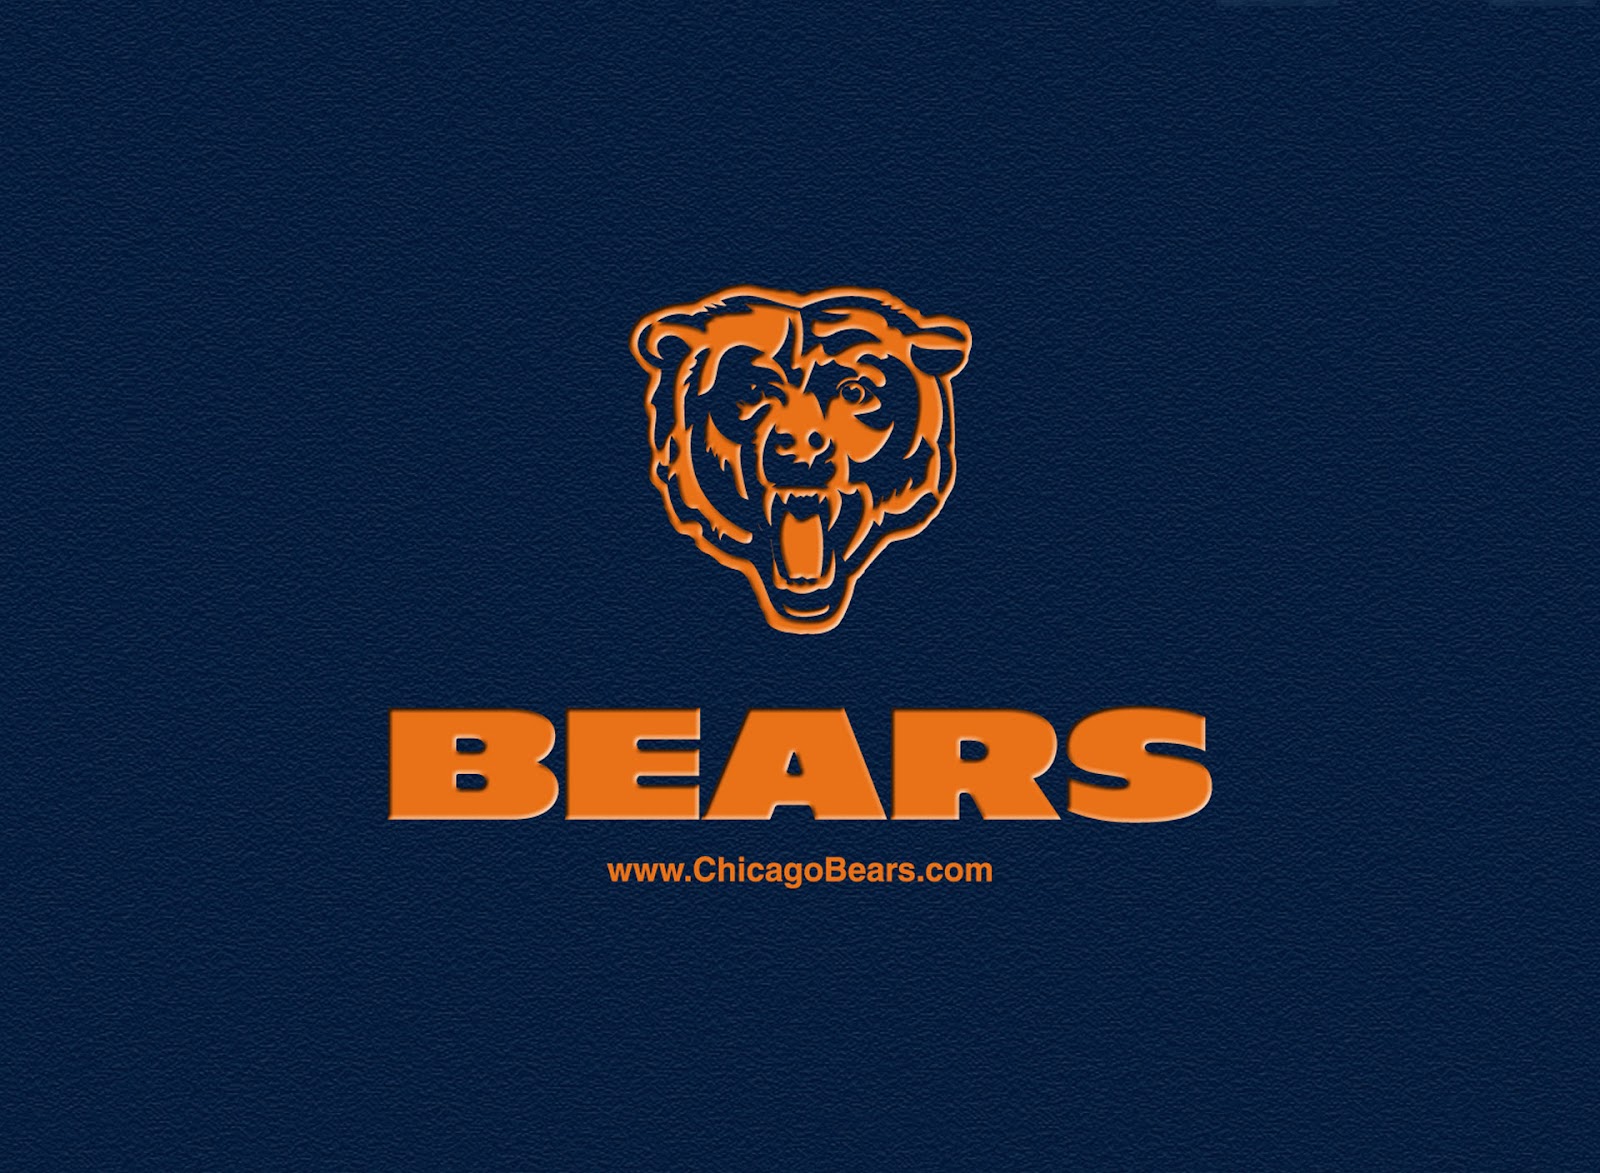 Chicago Bears Da Bears Wallpaper PicsWallpapercom